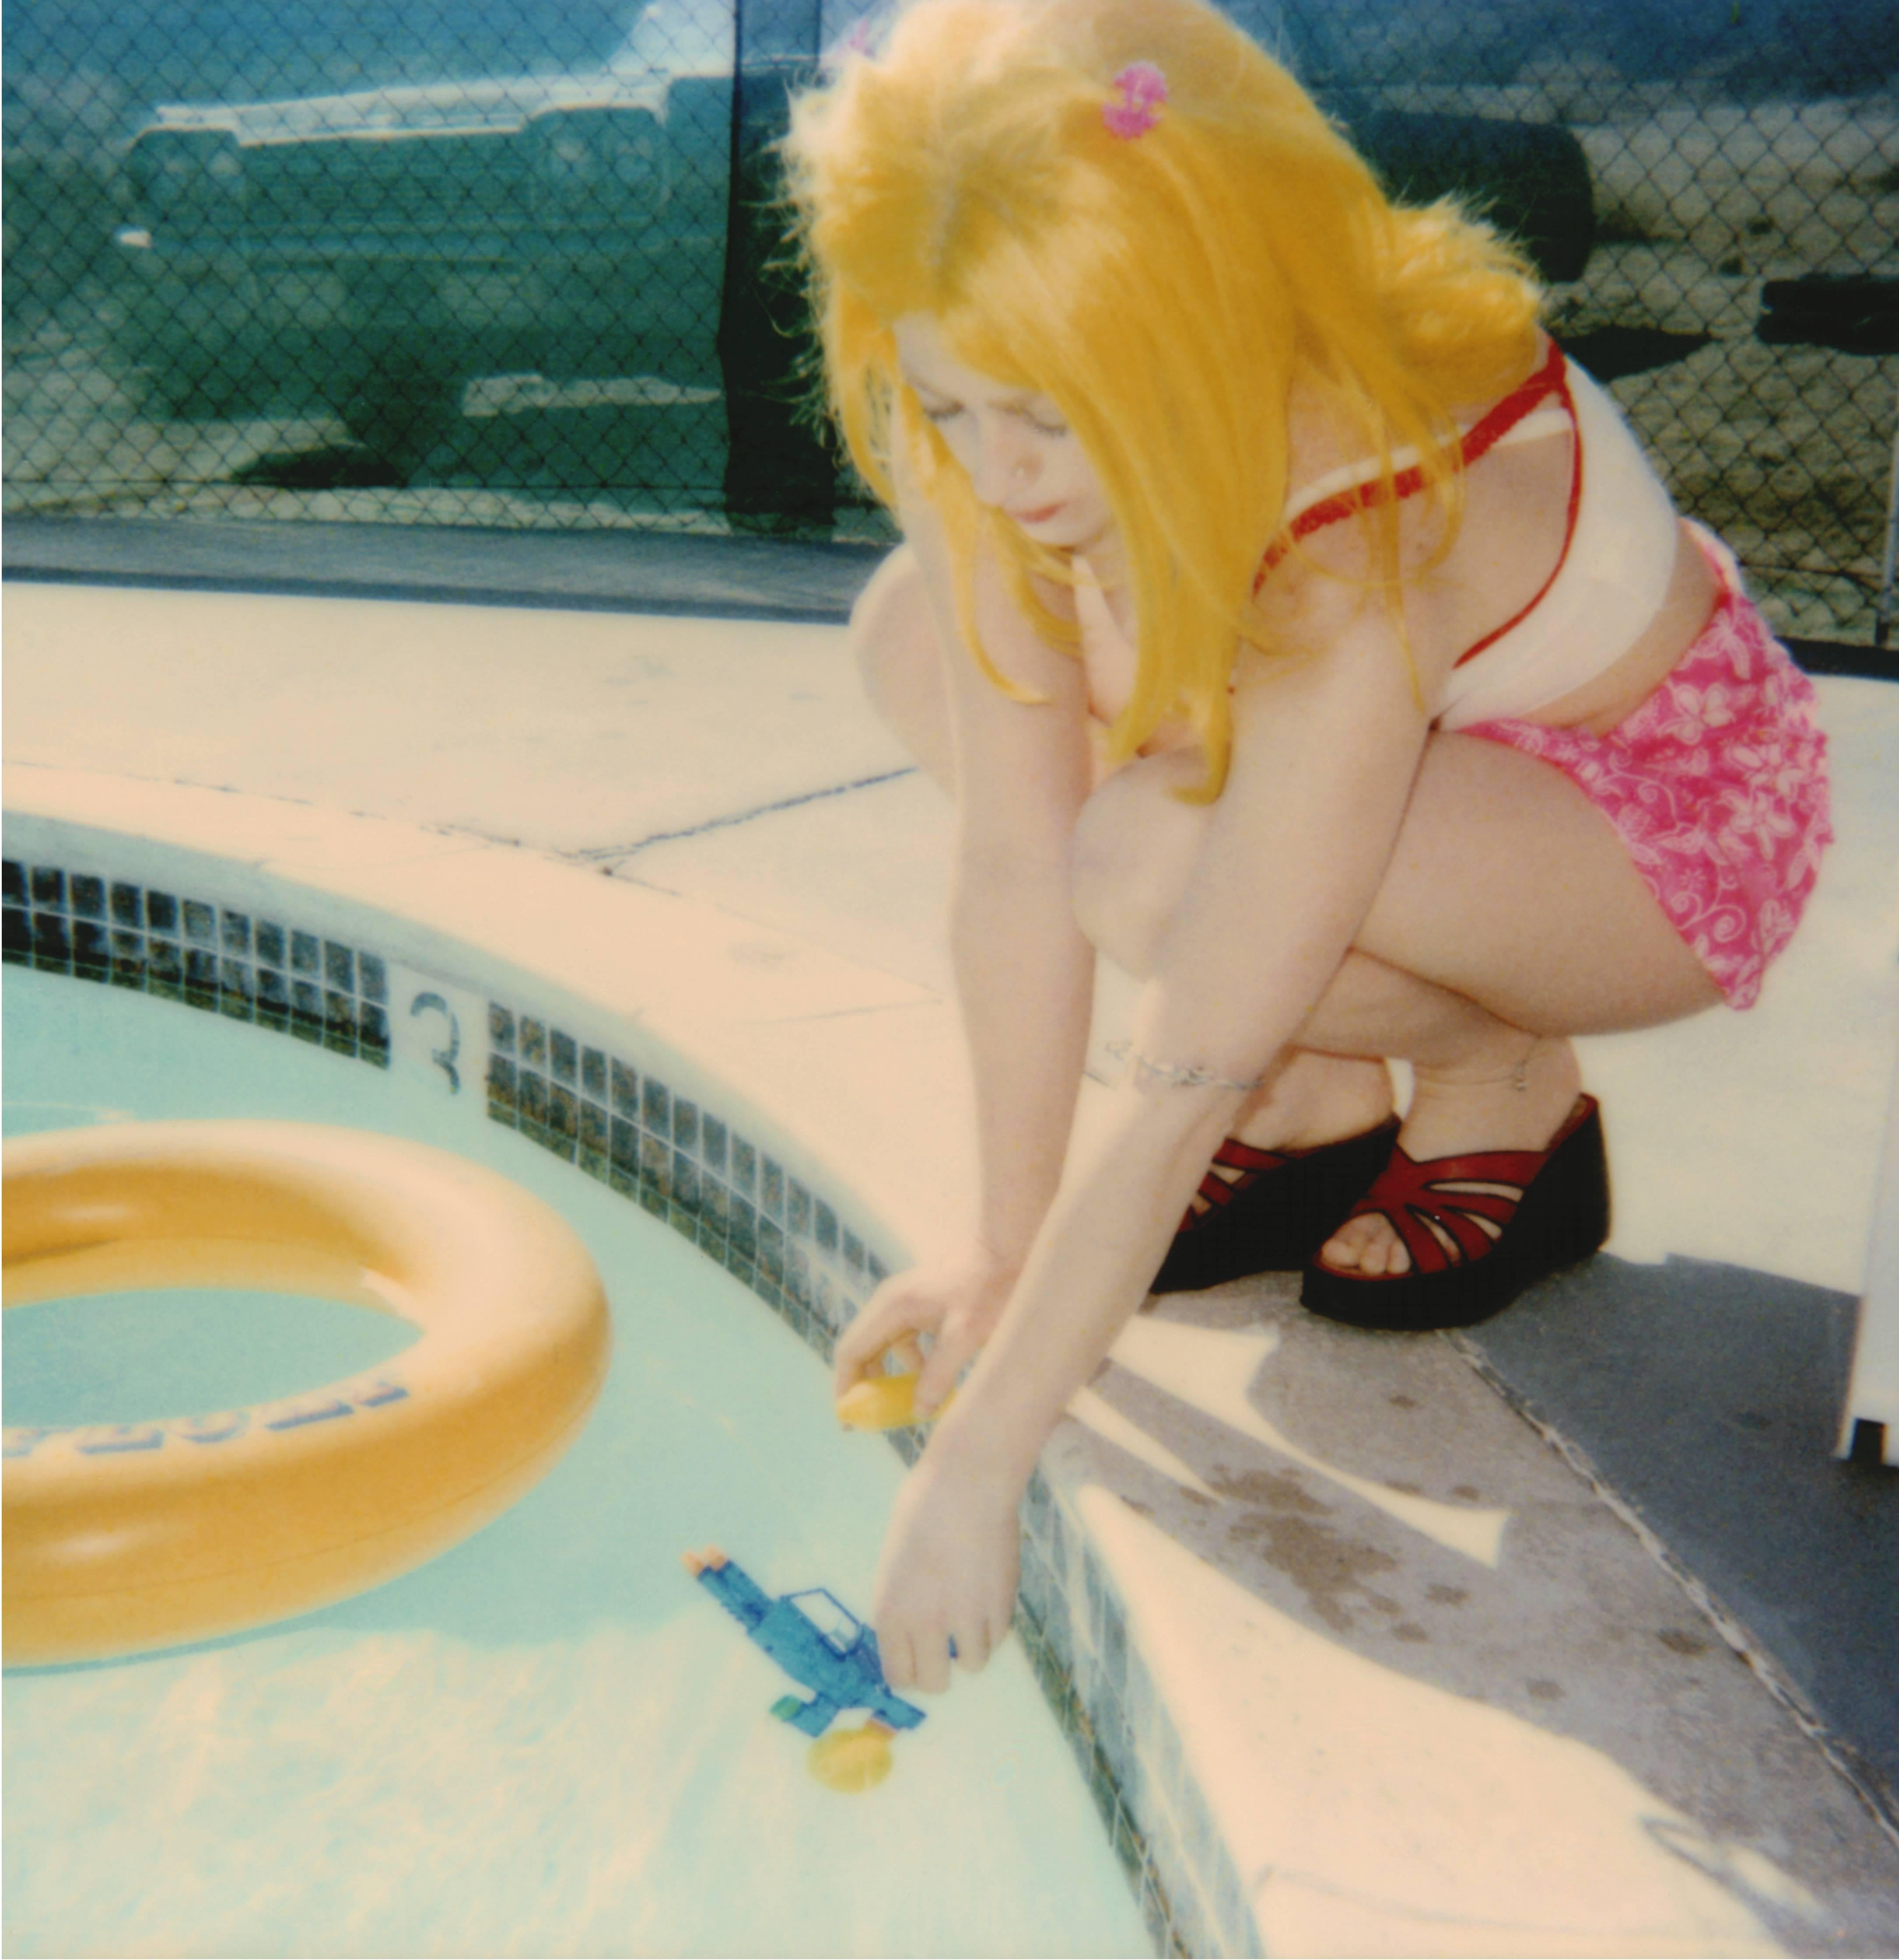 Stefanie Schneider Portrait Photograph - Max by the Pool (29 Palms, CA) - Polaroid, Contemporary, Women, Color